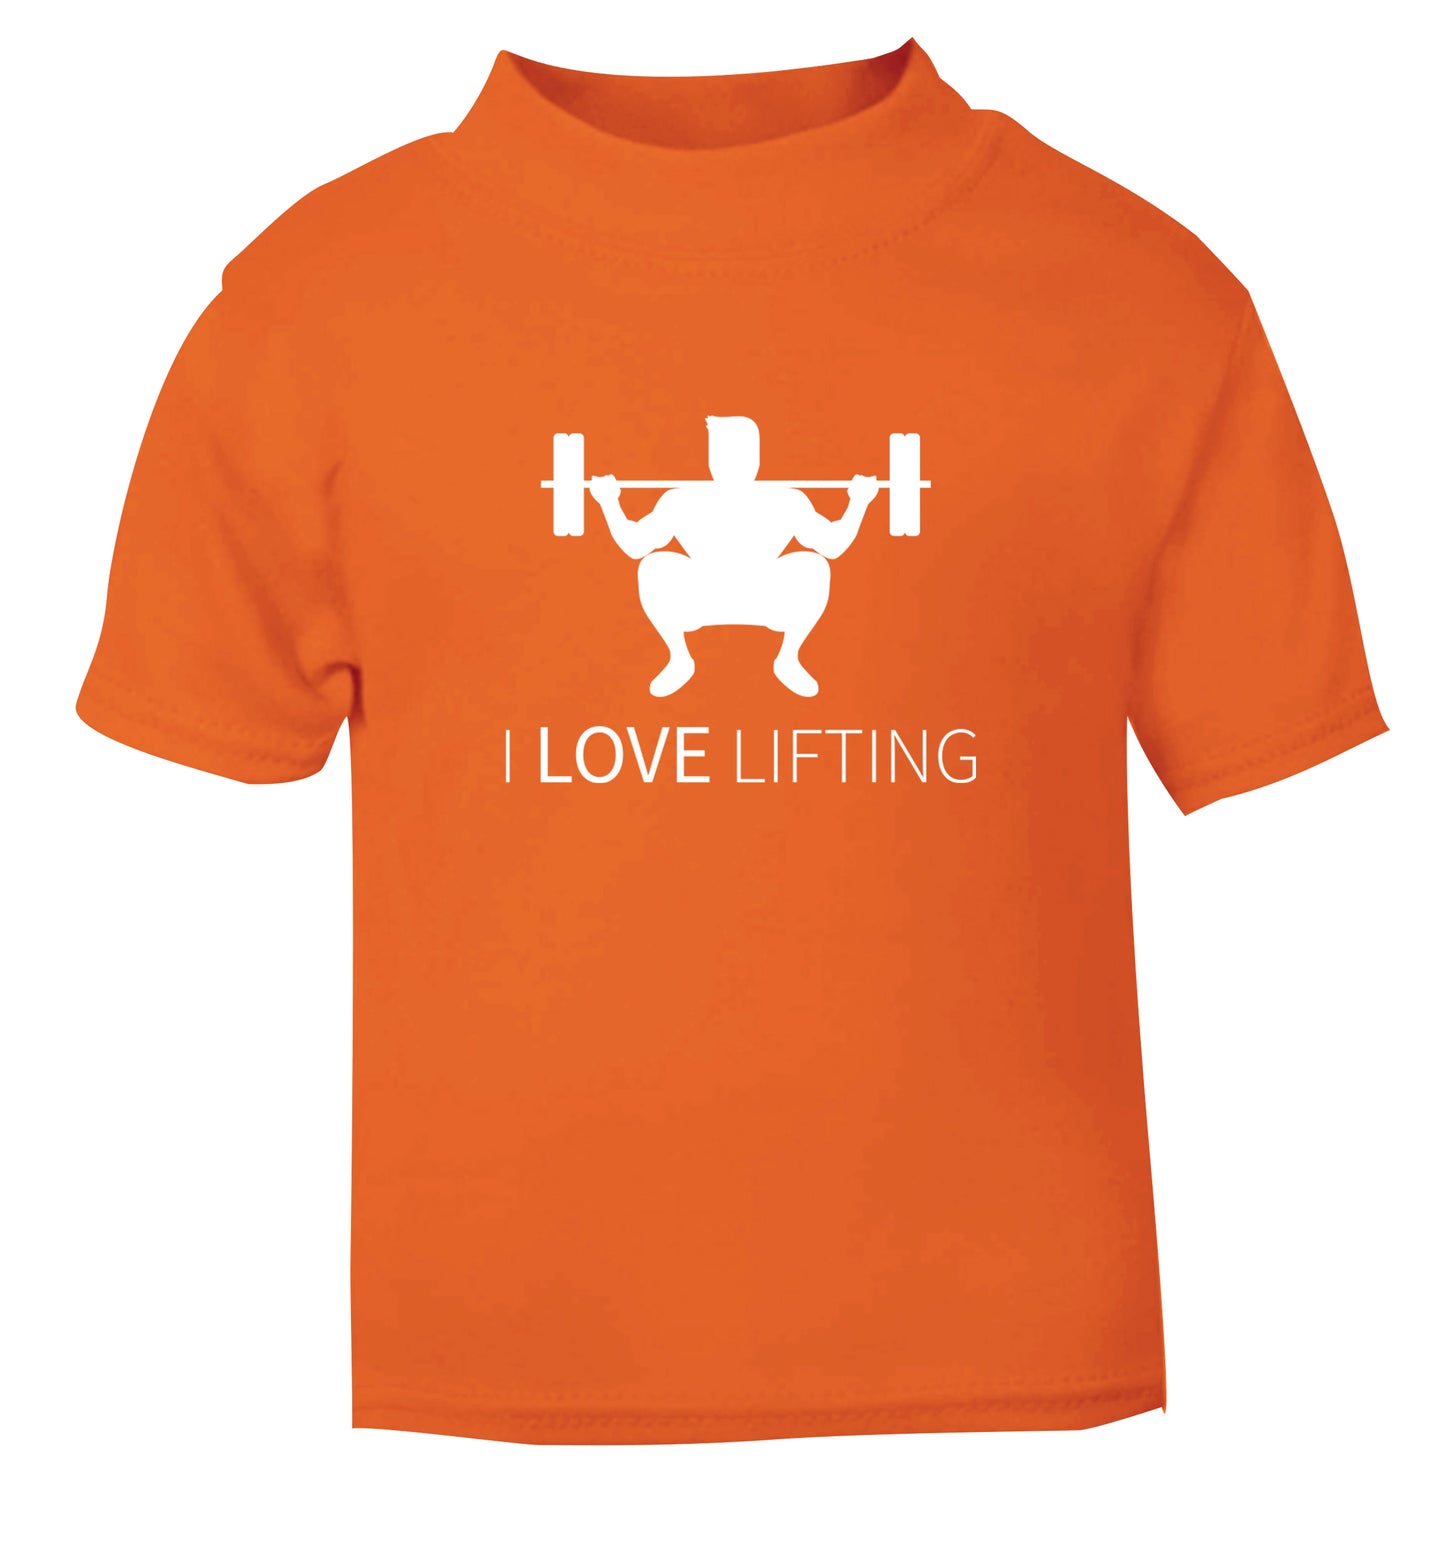 I Love Lifting orange Baby Toddler Tshirt 2 Years